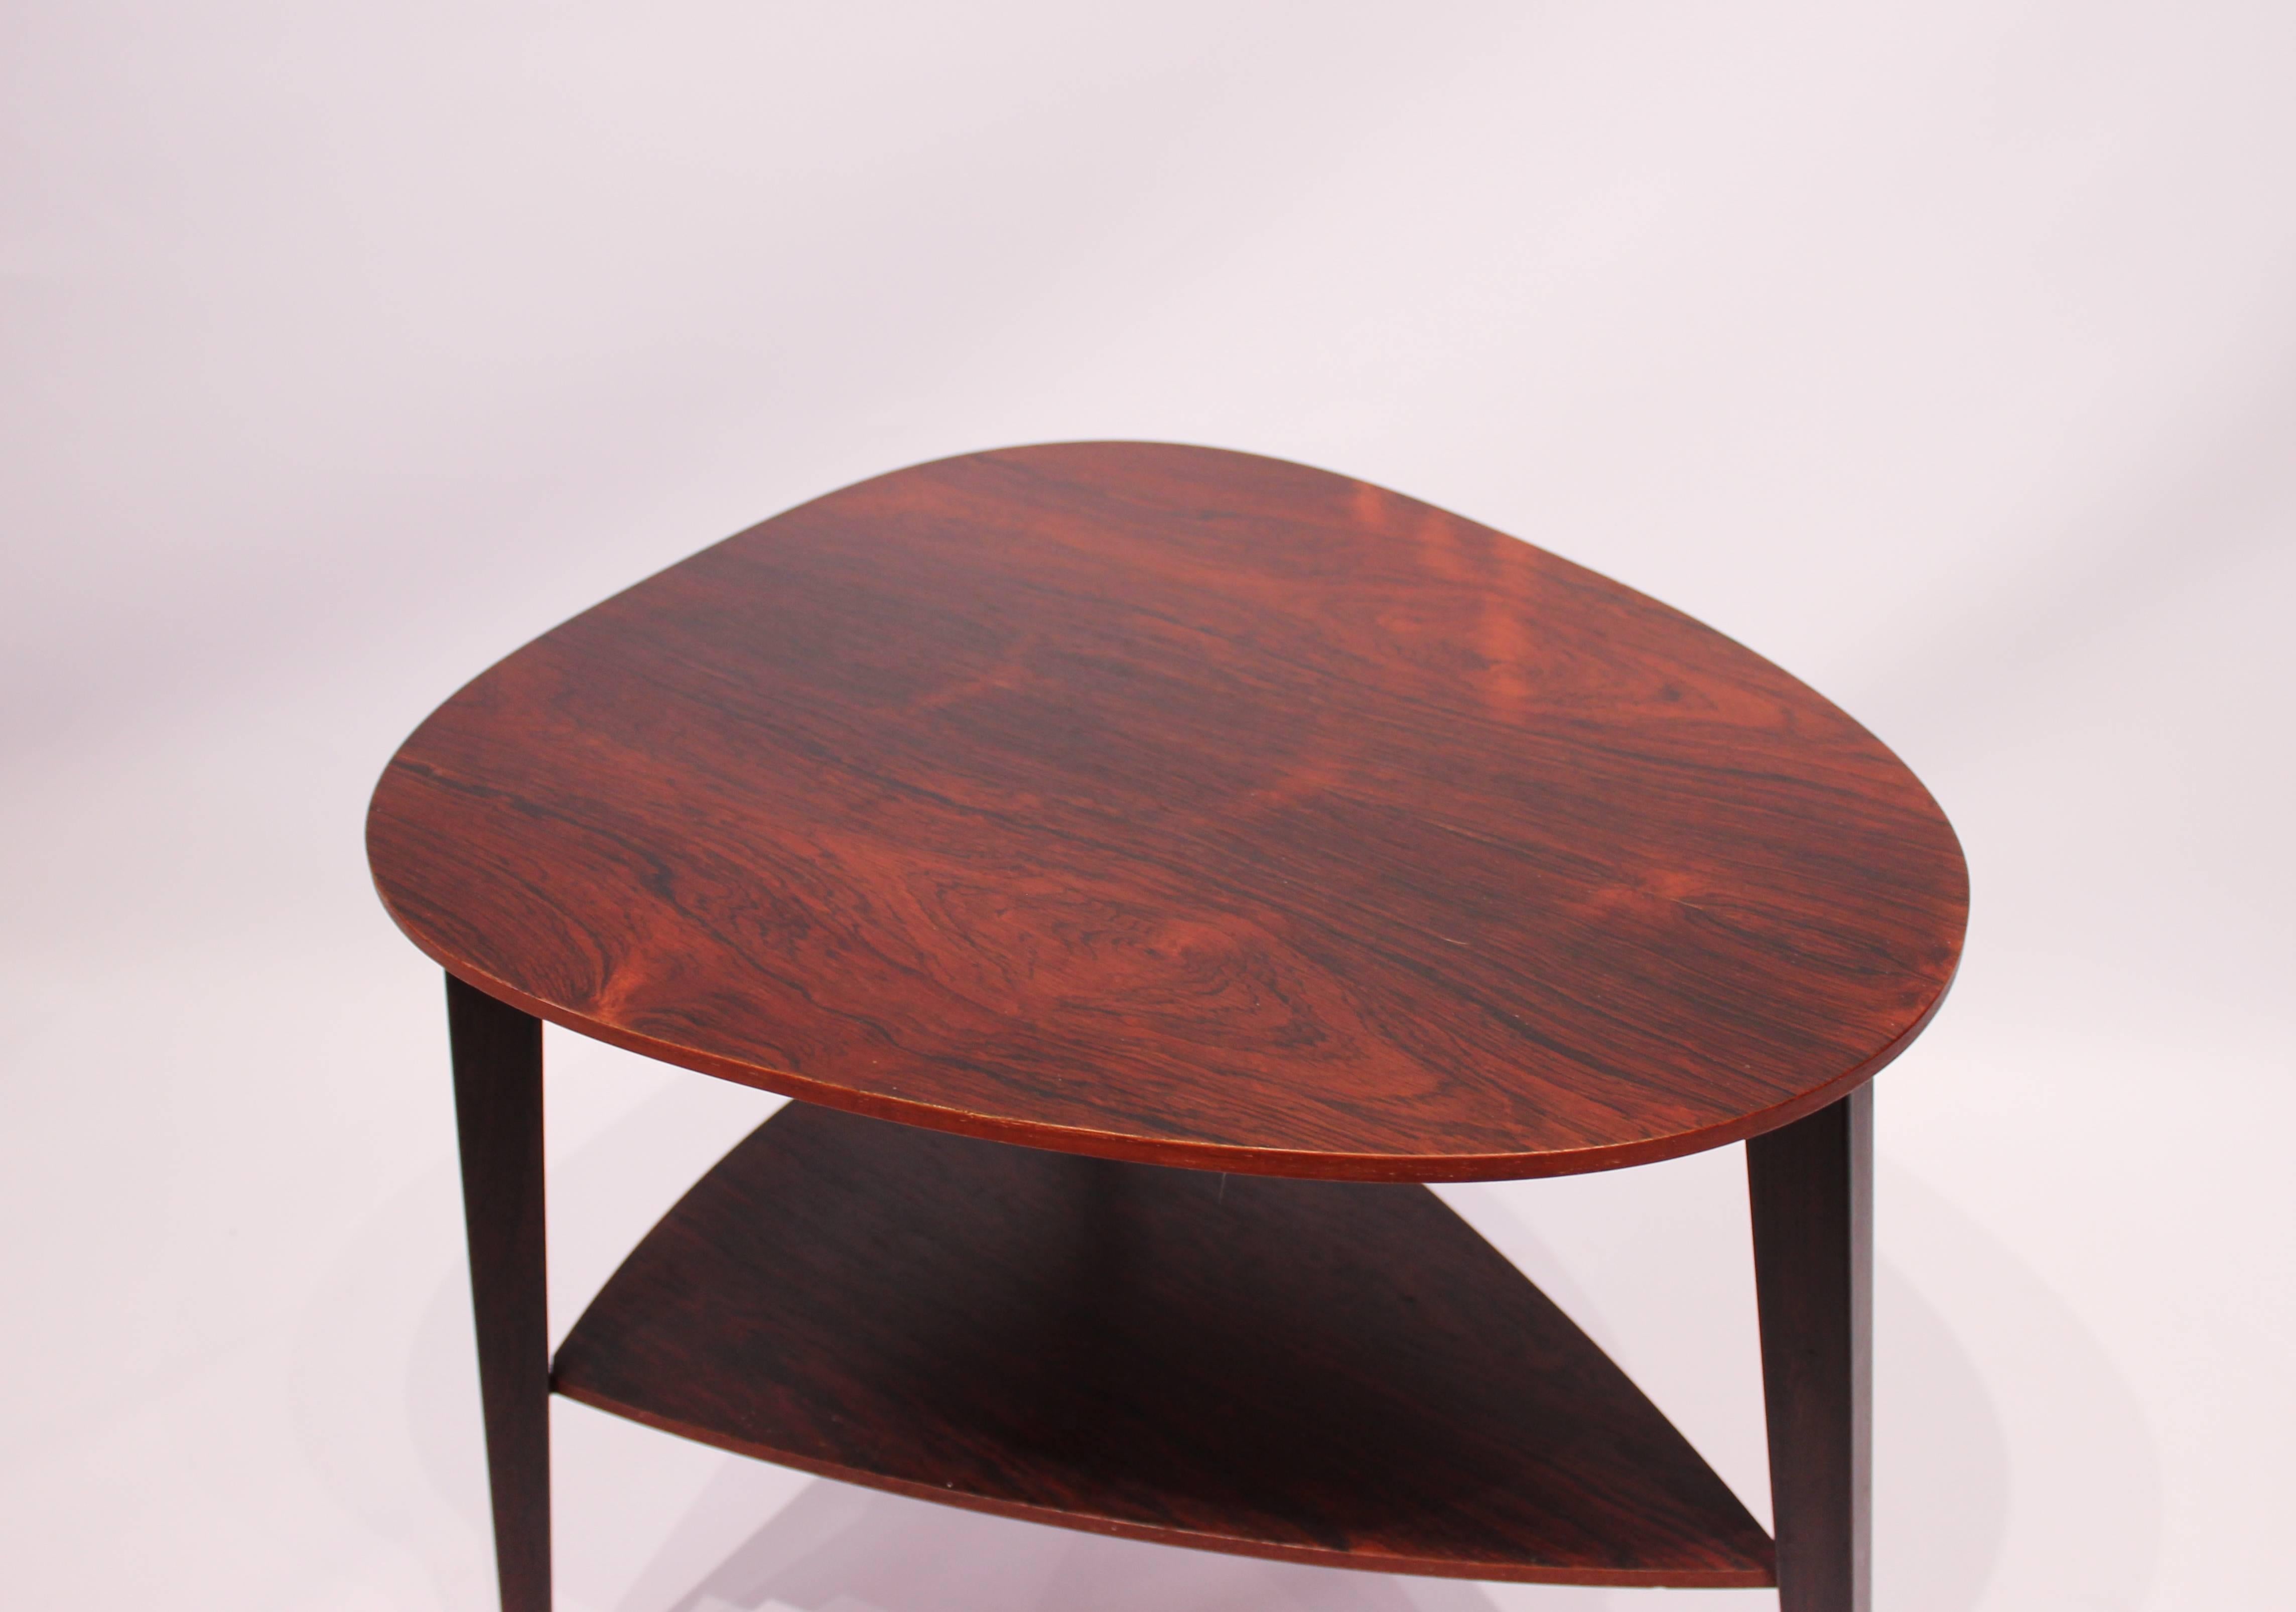 Scandinavian Modern Side Table in Dark Wood of Beautiful Danish Design from the 1960s